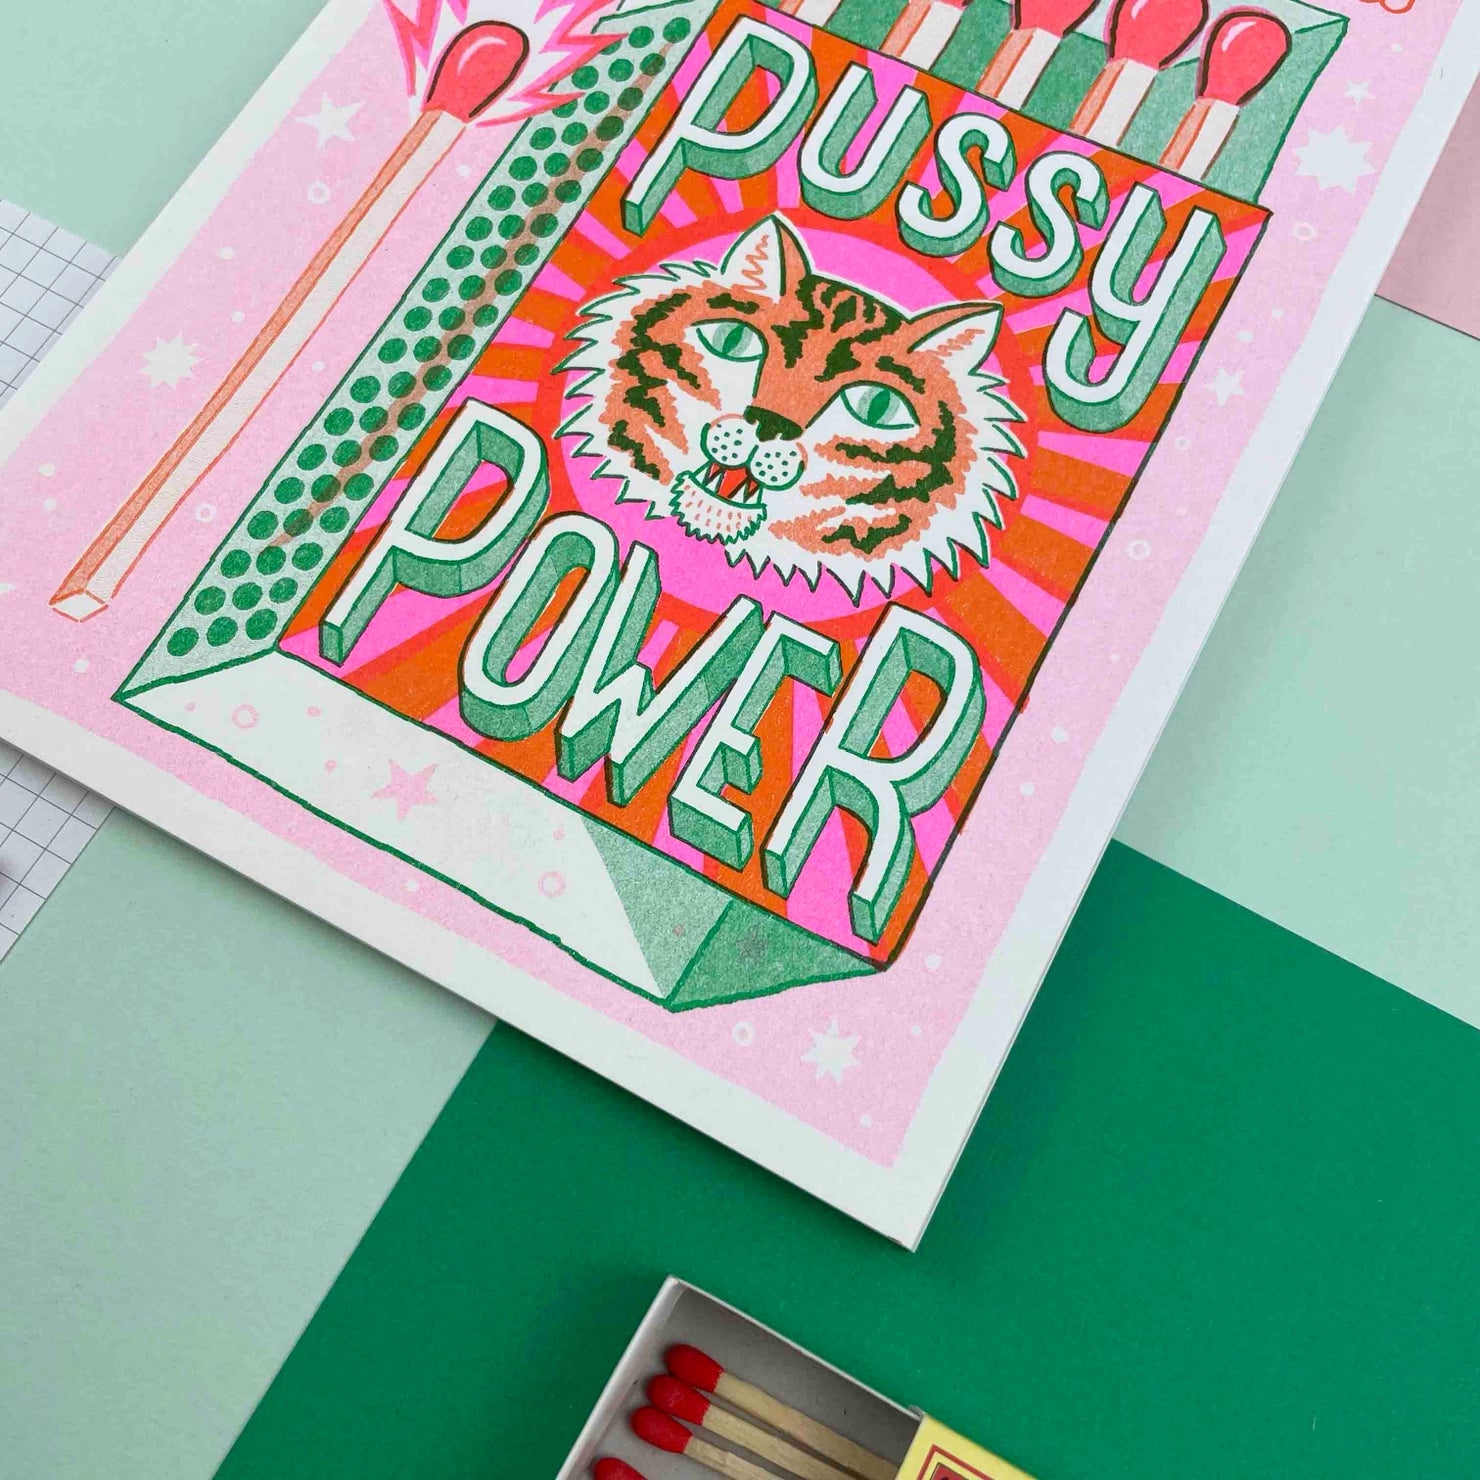 Pussy Power print